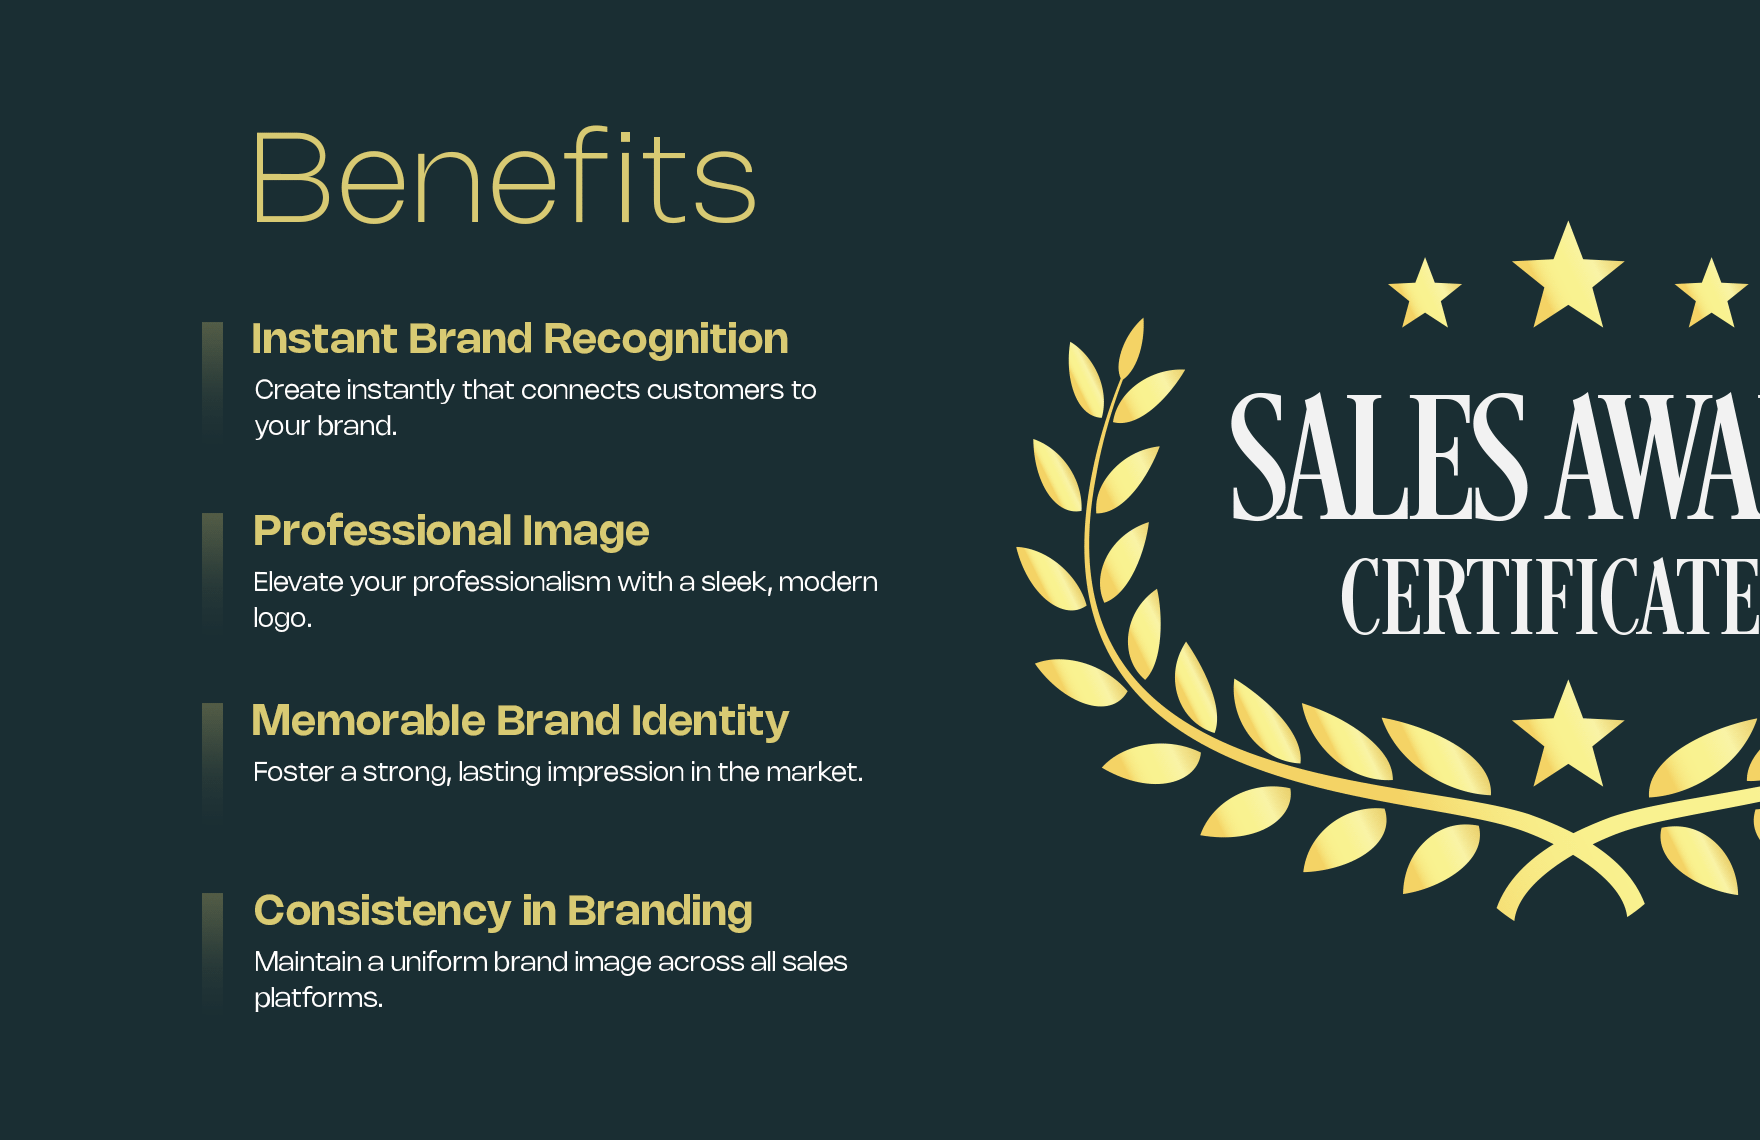 Sales Award Certificates Logo Template